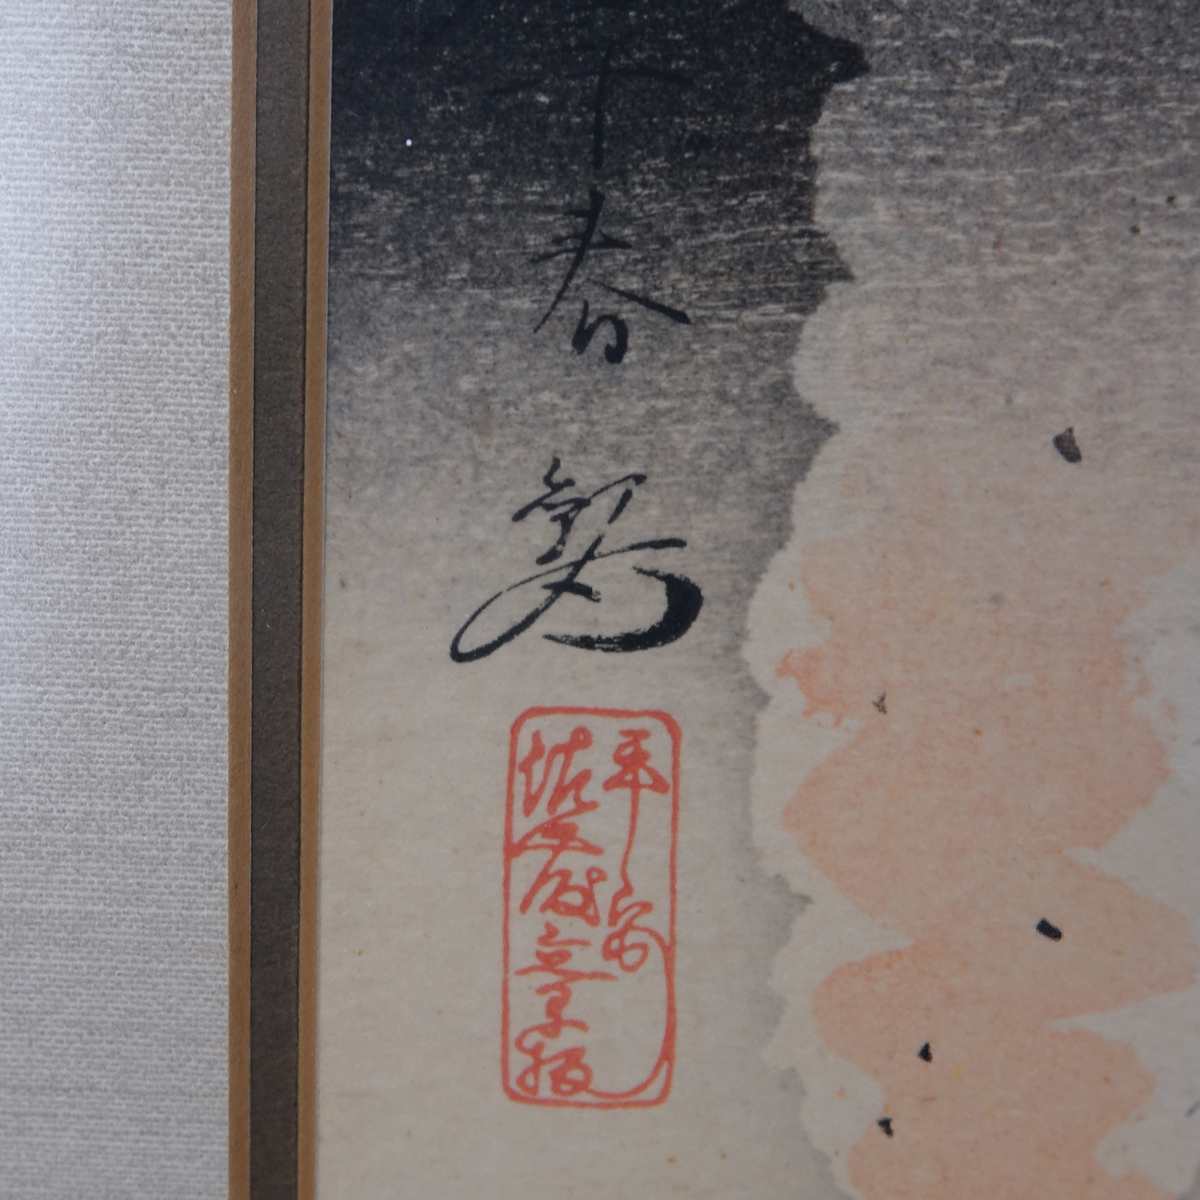 Kampo Yoshikawa, Japanese (born 1894) Woodblock, Cherry Blossoms at Night, Kyoto. Signed left.